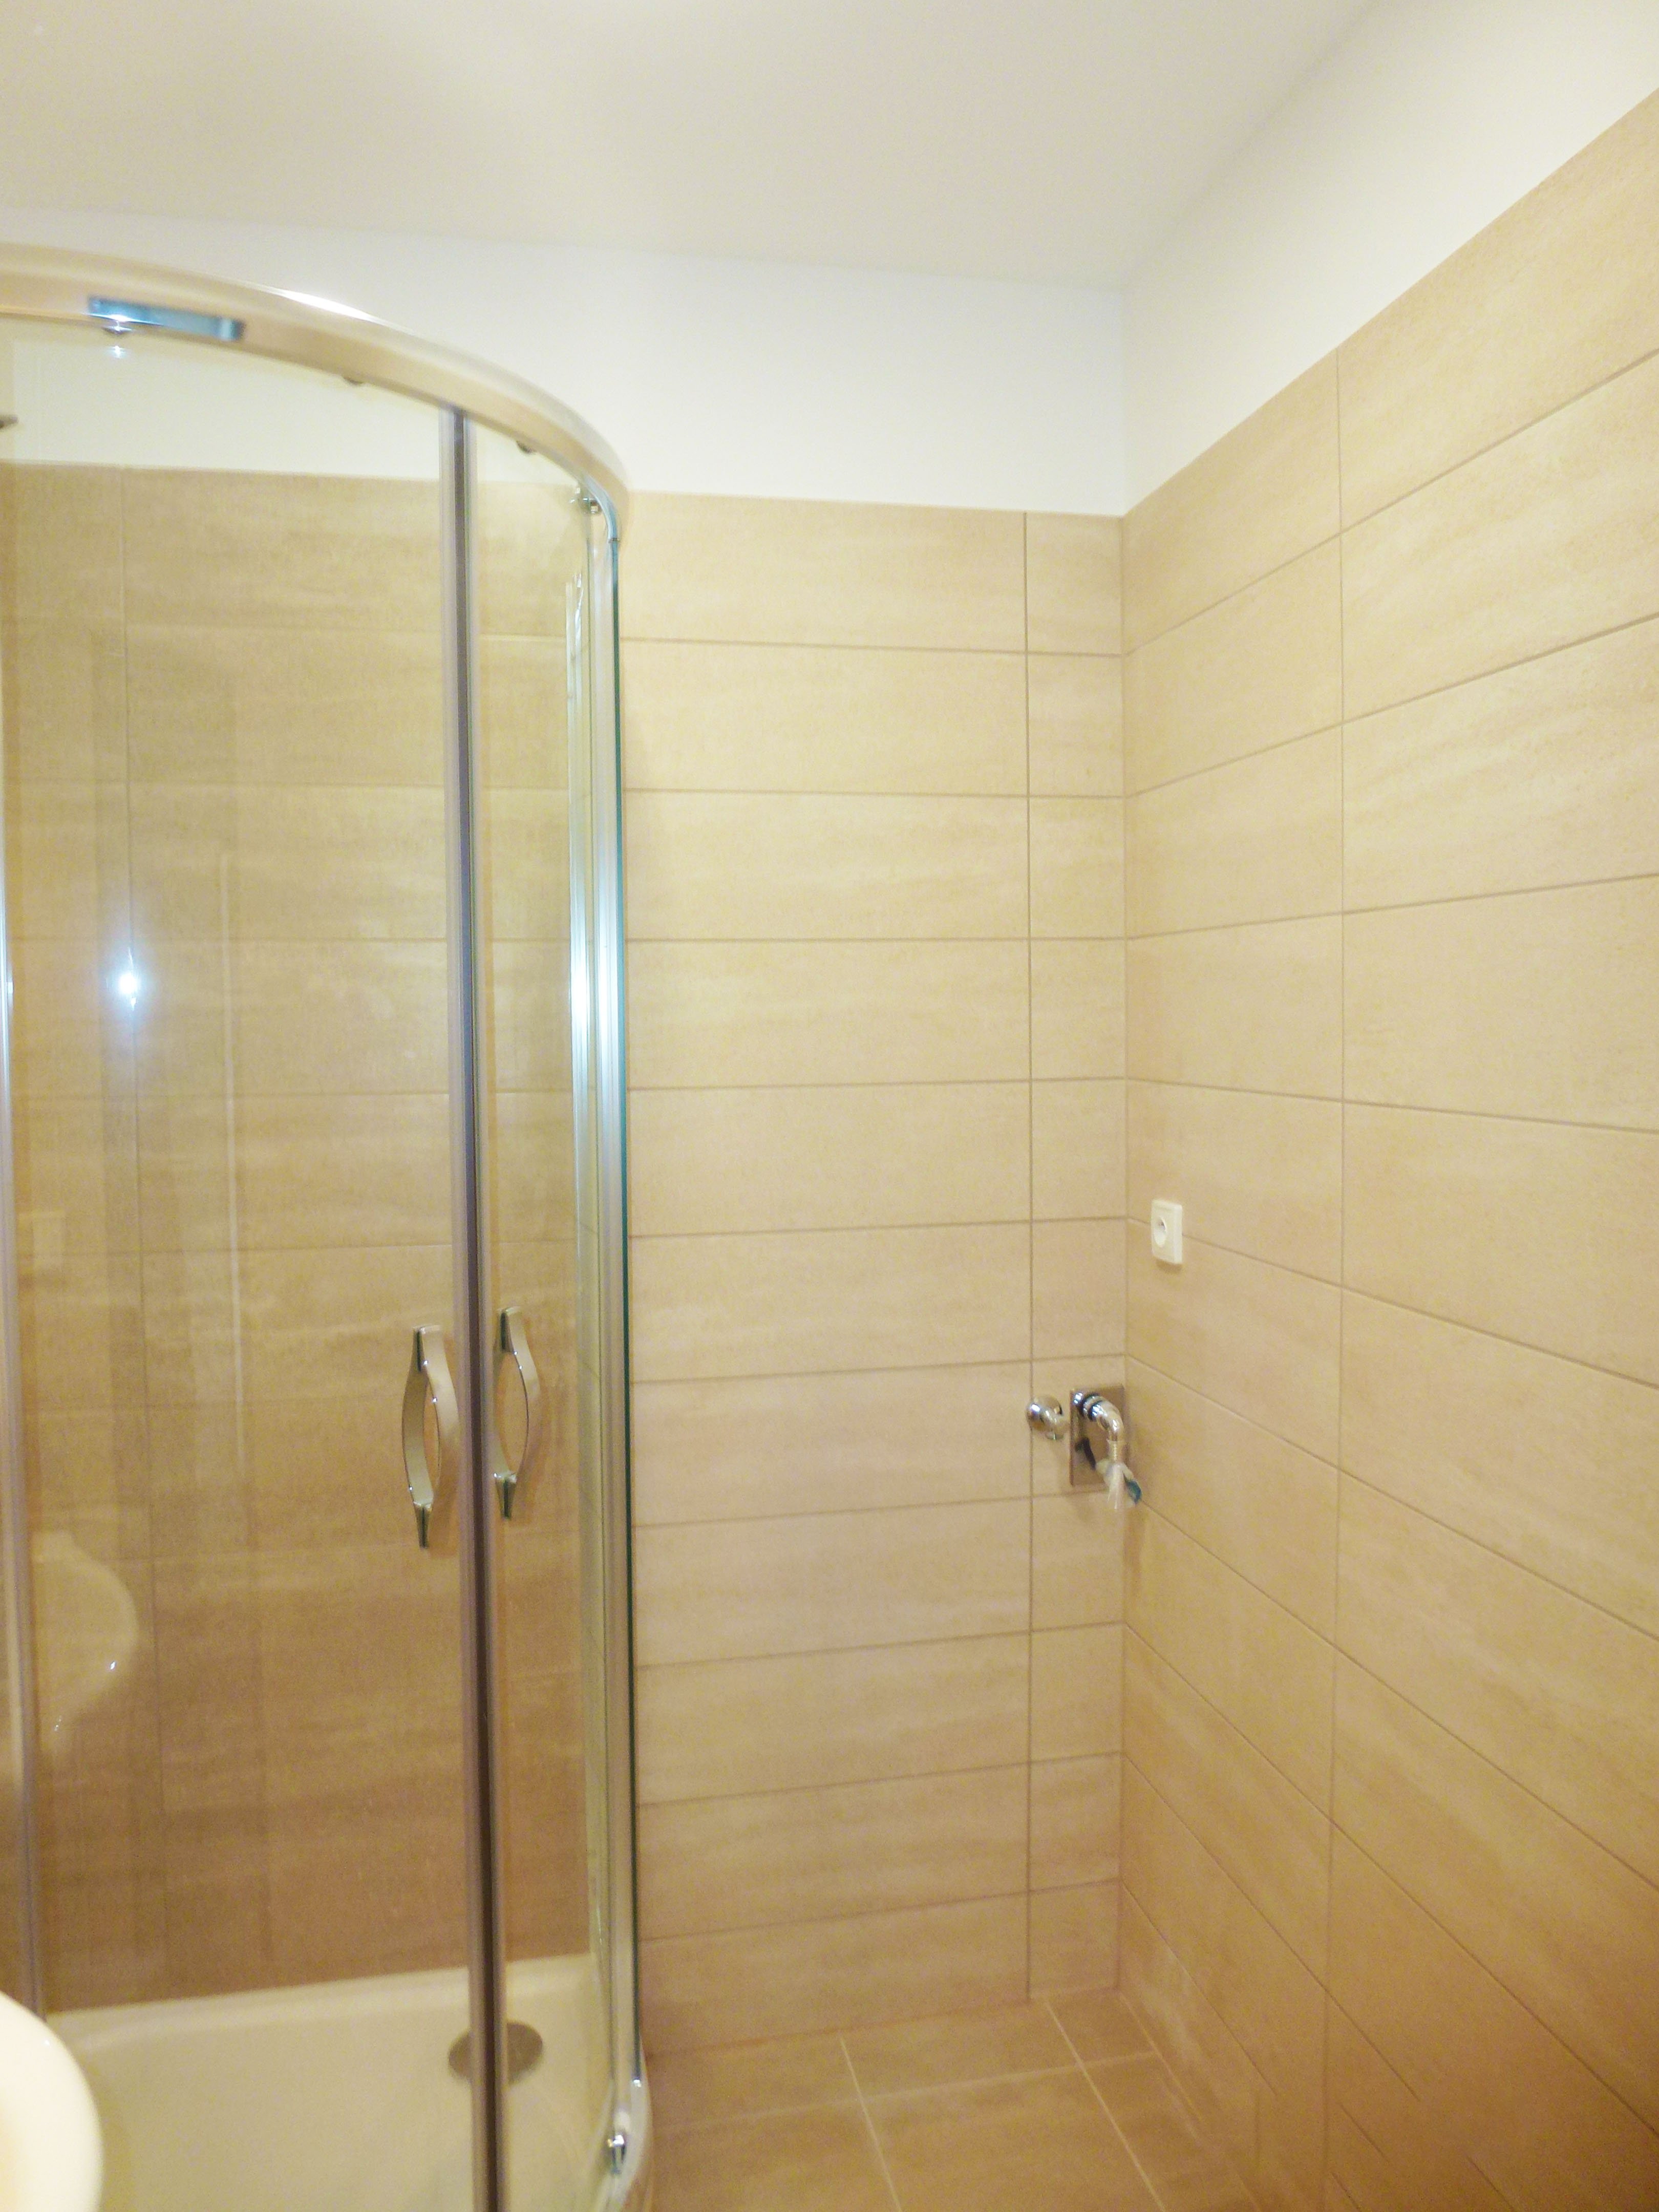 GELCO SIGMA sprchový kout 900 čtvrtkruhový R550, jednodílné dveře, rám chrom, sklo brick SG3159 | Koupelny-svitavy.cz